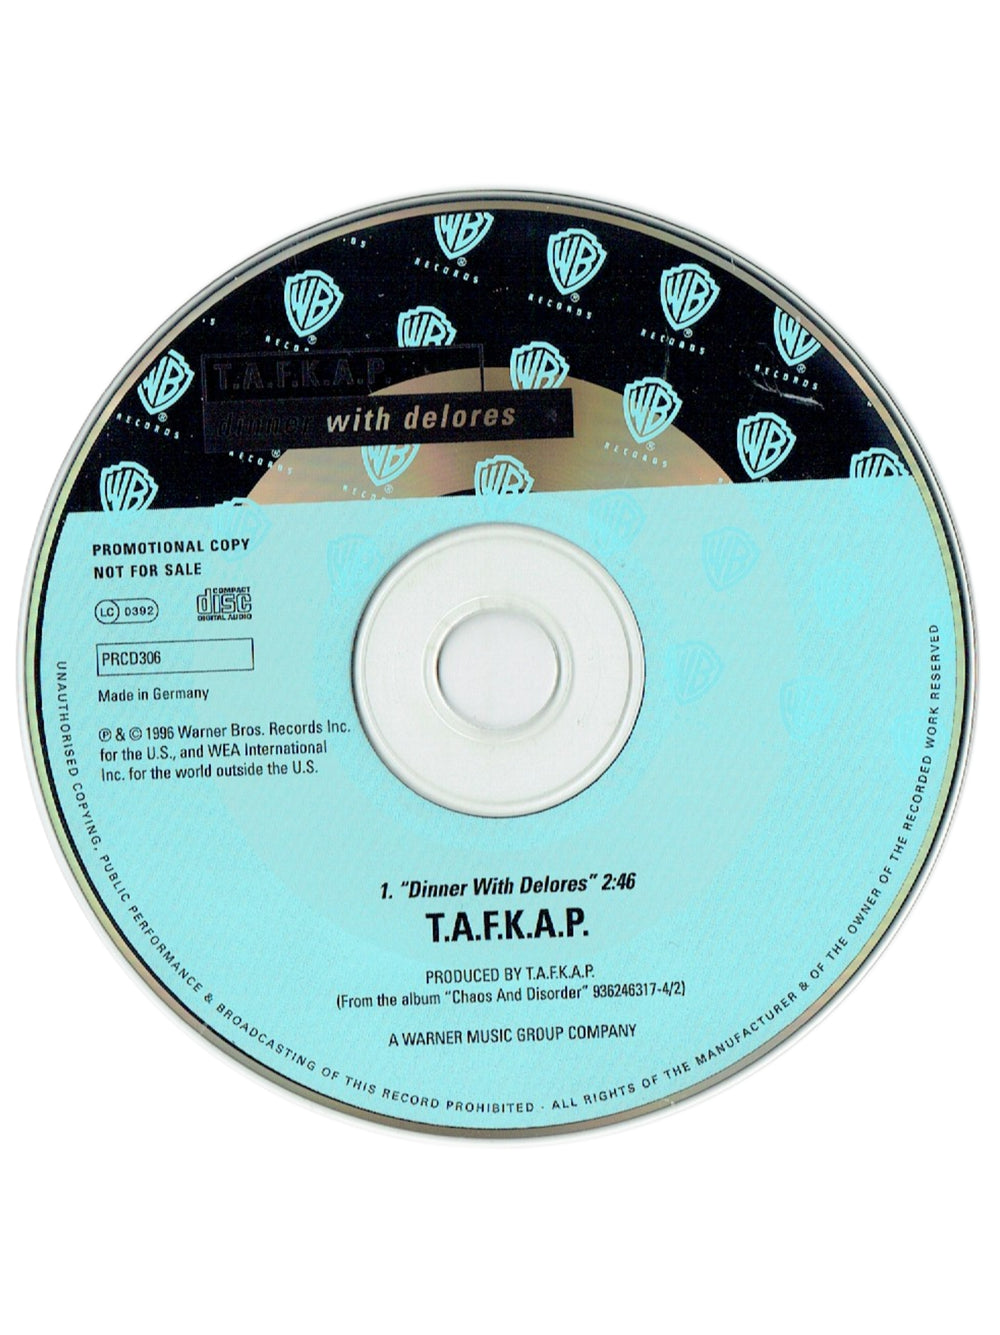 Prince – TAFKAP Dinner With Delores Promo PA CD Single 1 Track EU Release 1996 Prince *